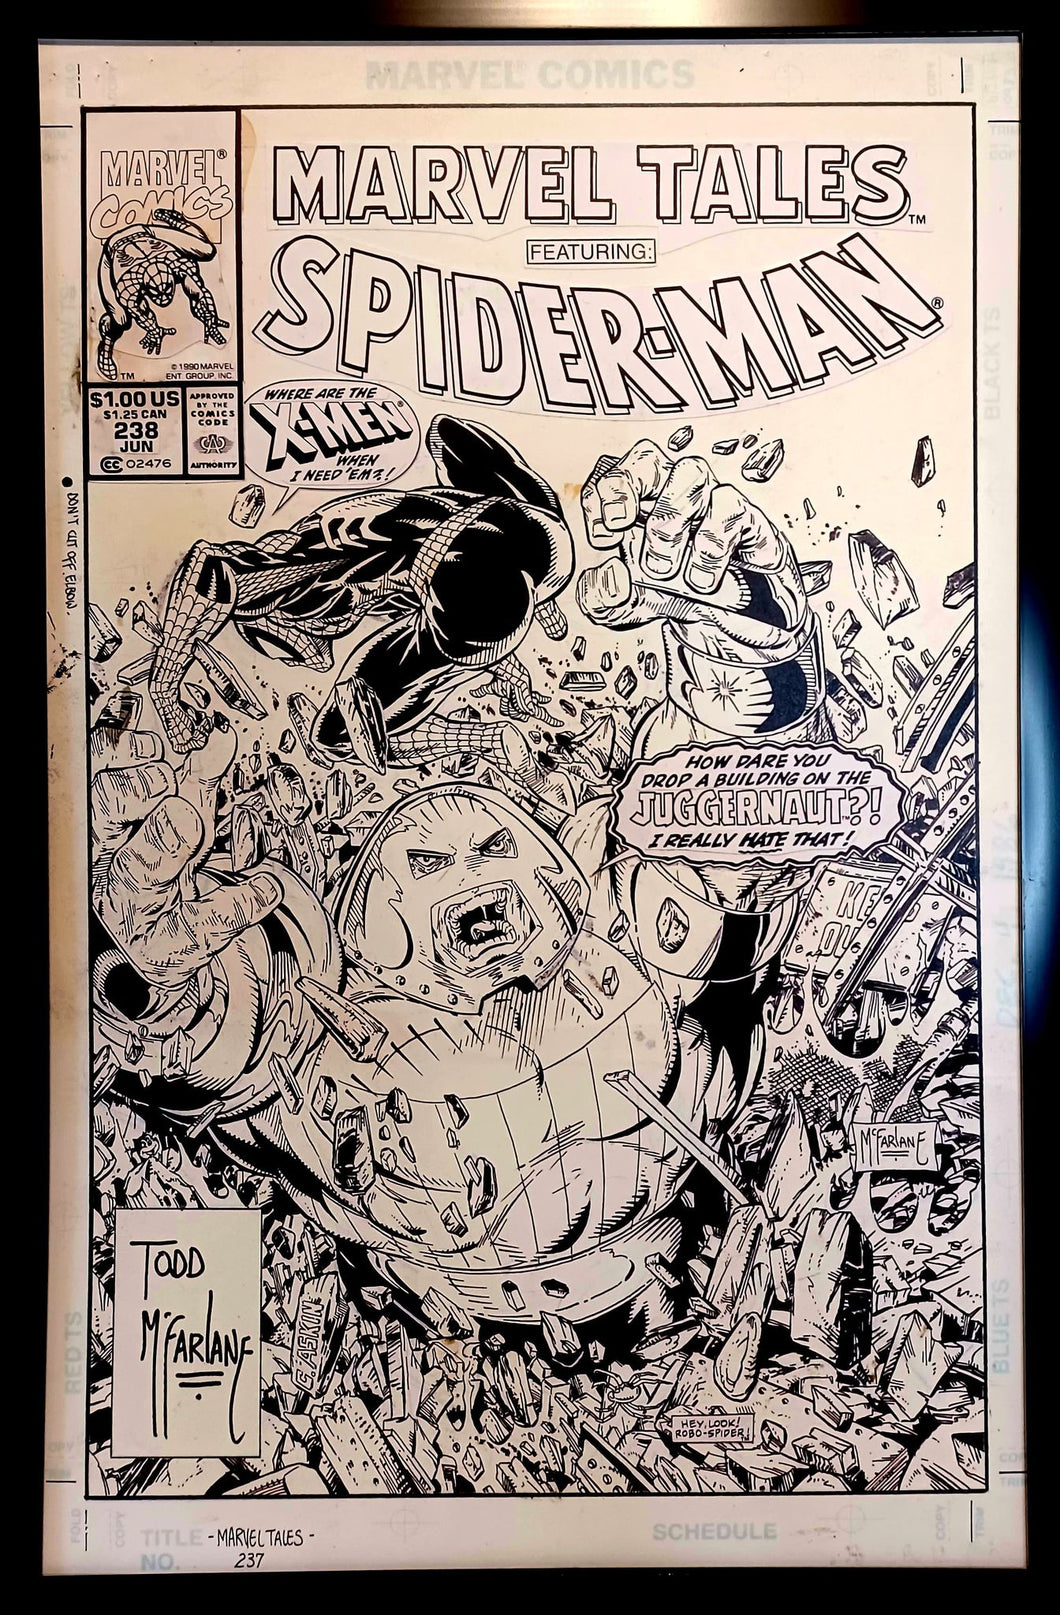 Marvel Tales #238 by Todd McFarlane 11x17 FRAMED Original Art Print Comic Poster